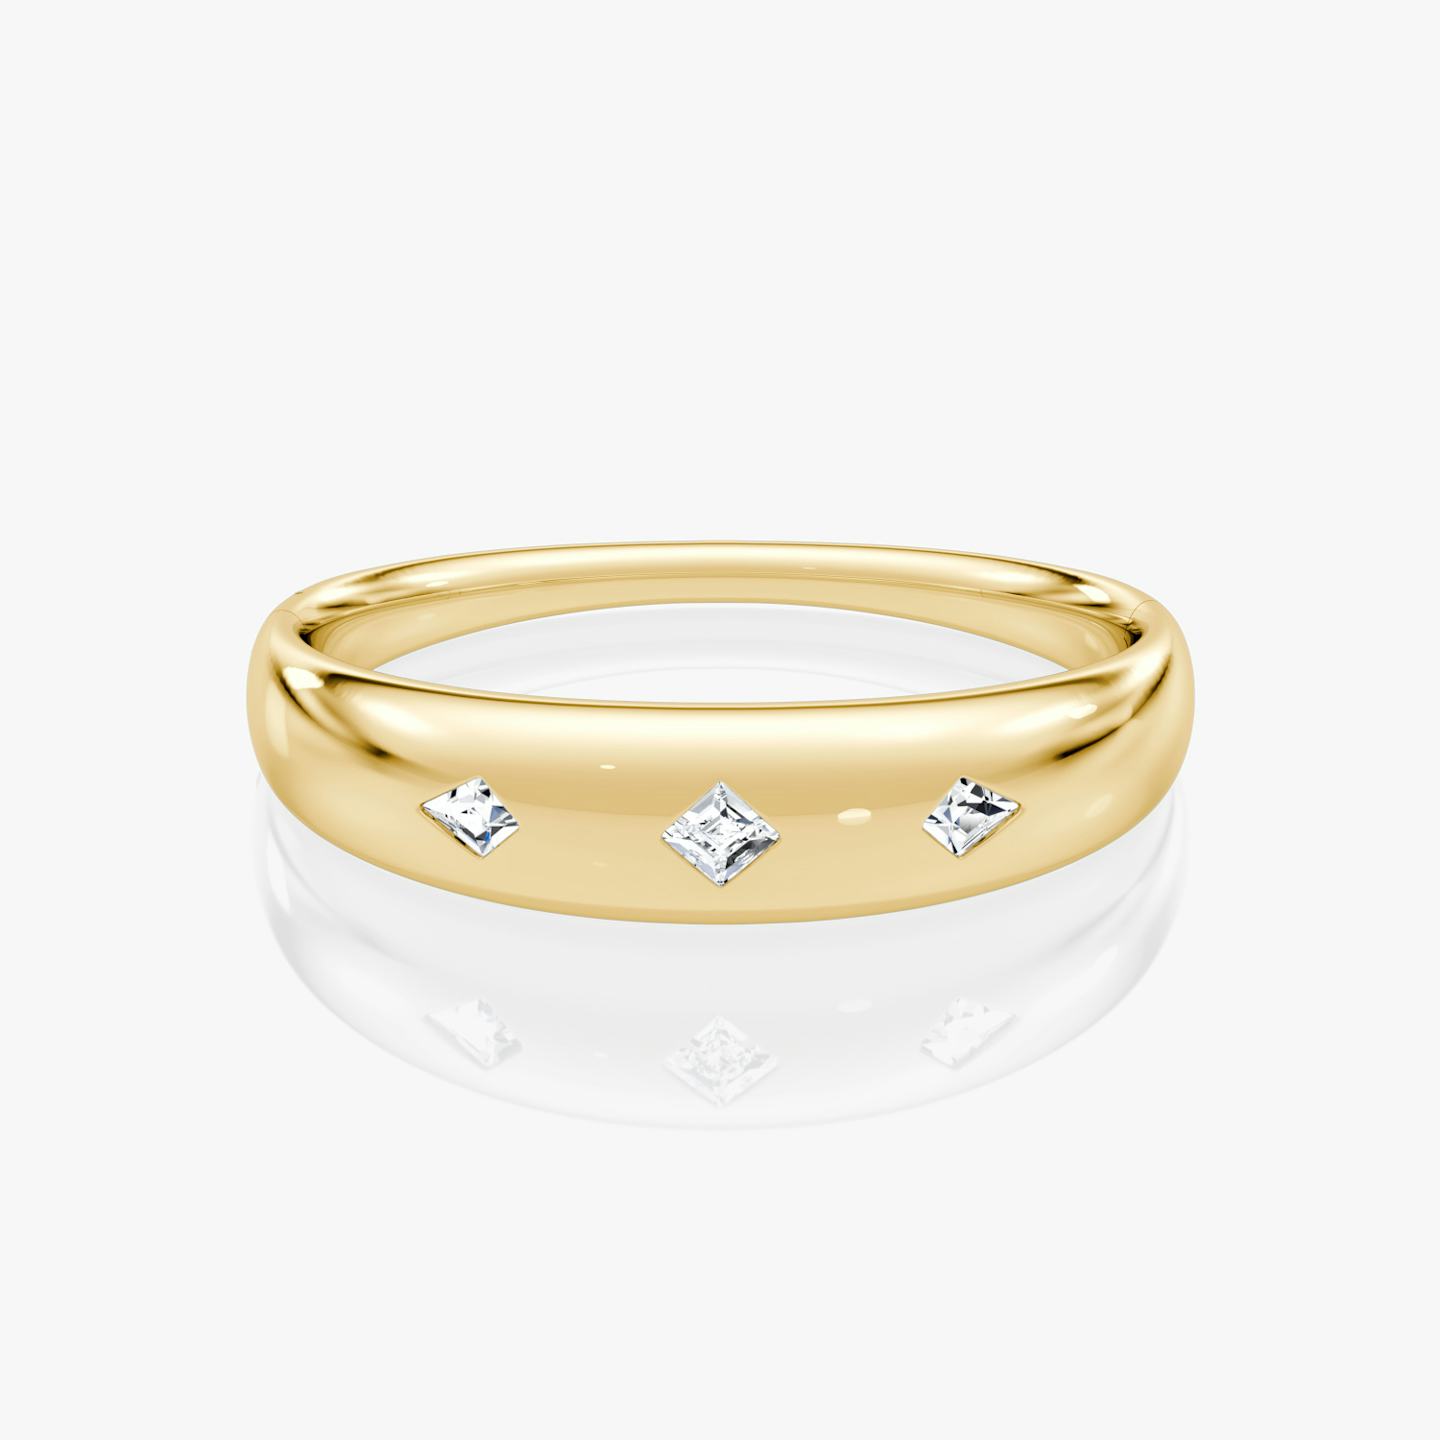 Dome Cuff Bracelet | Lozenge + Kite | 14k | 18k Yellow Gold | Wrist size: Medium